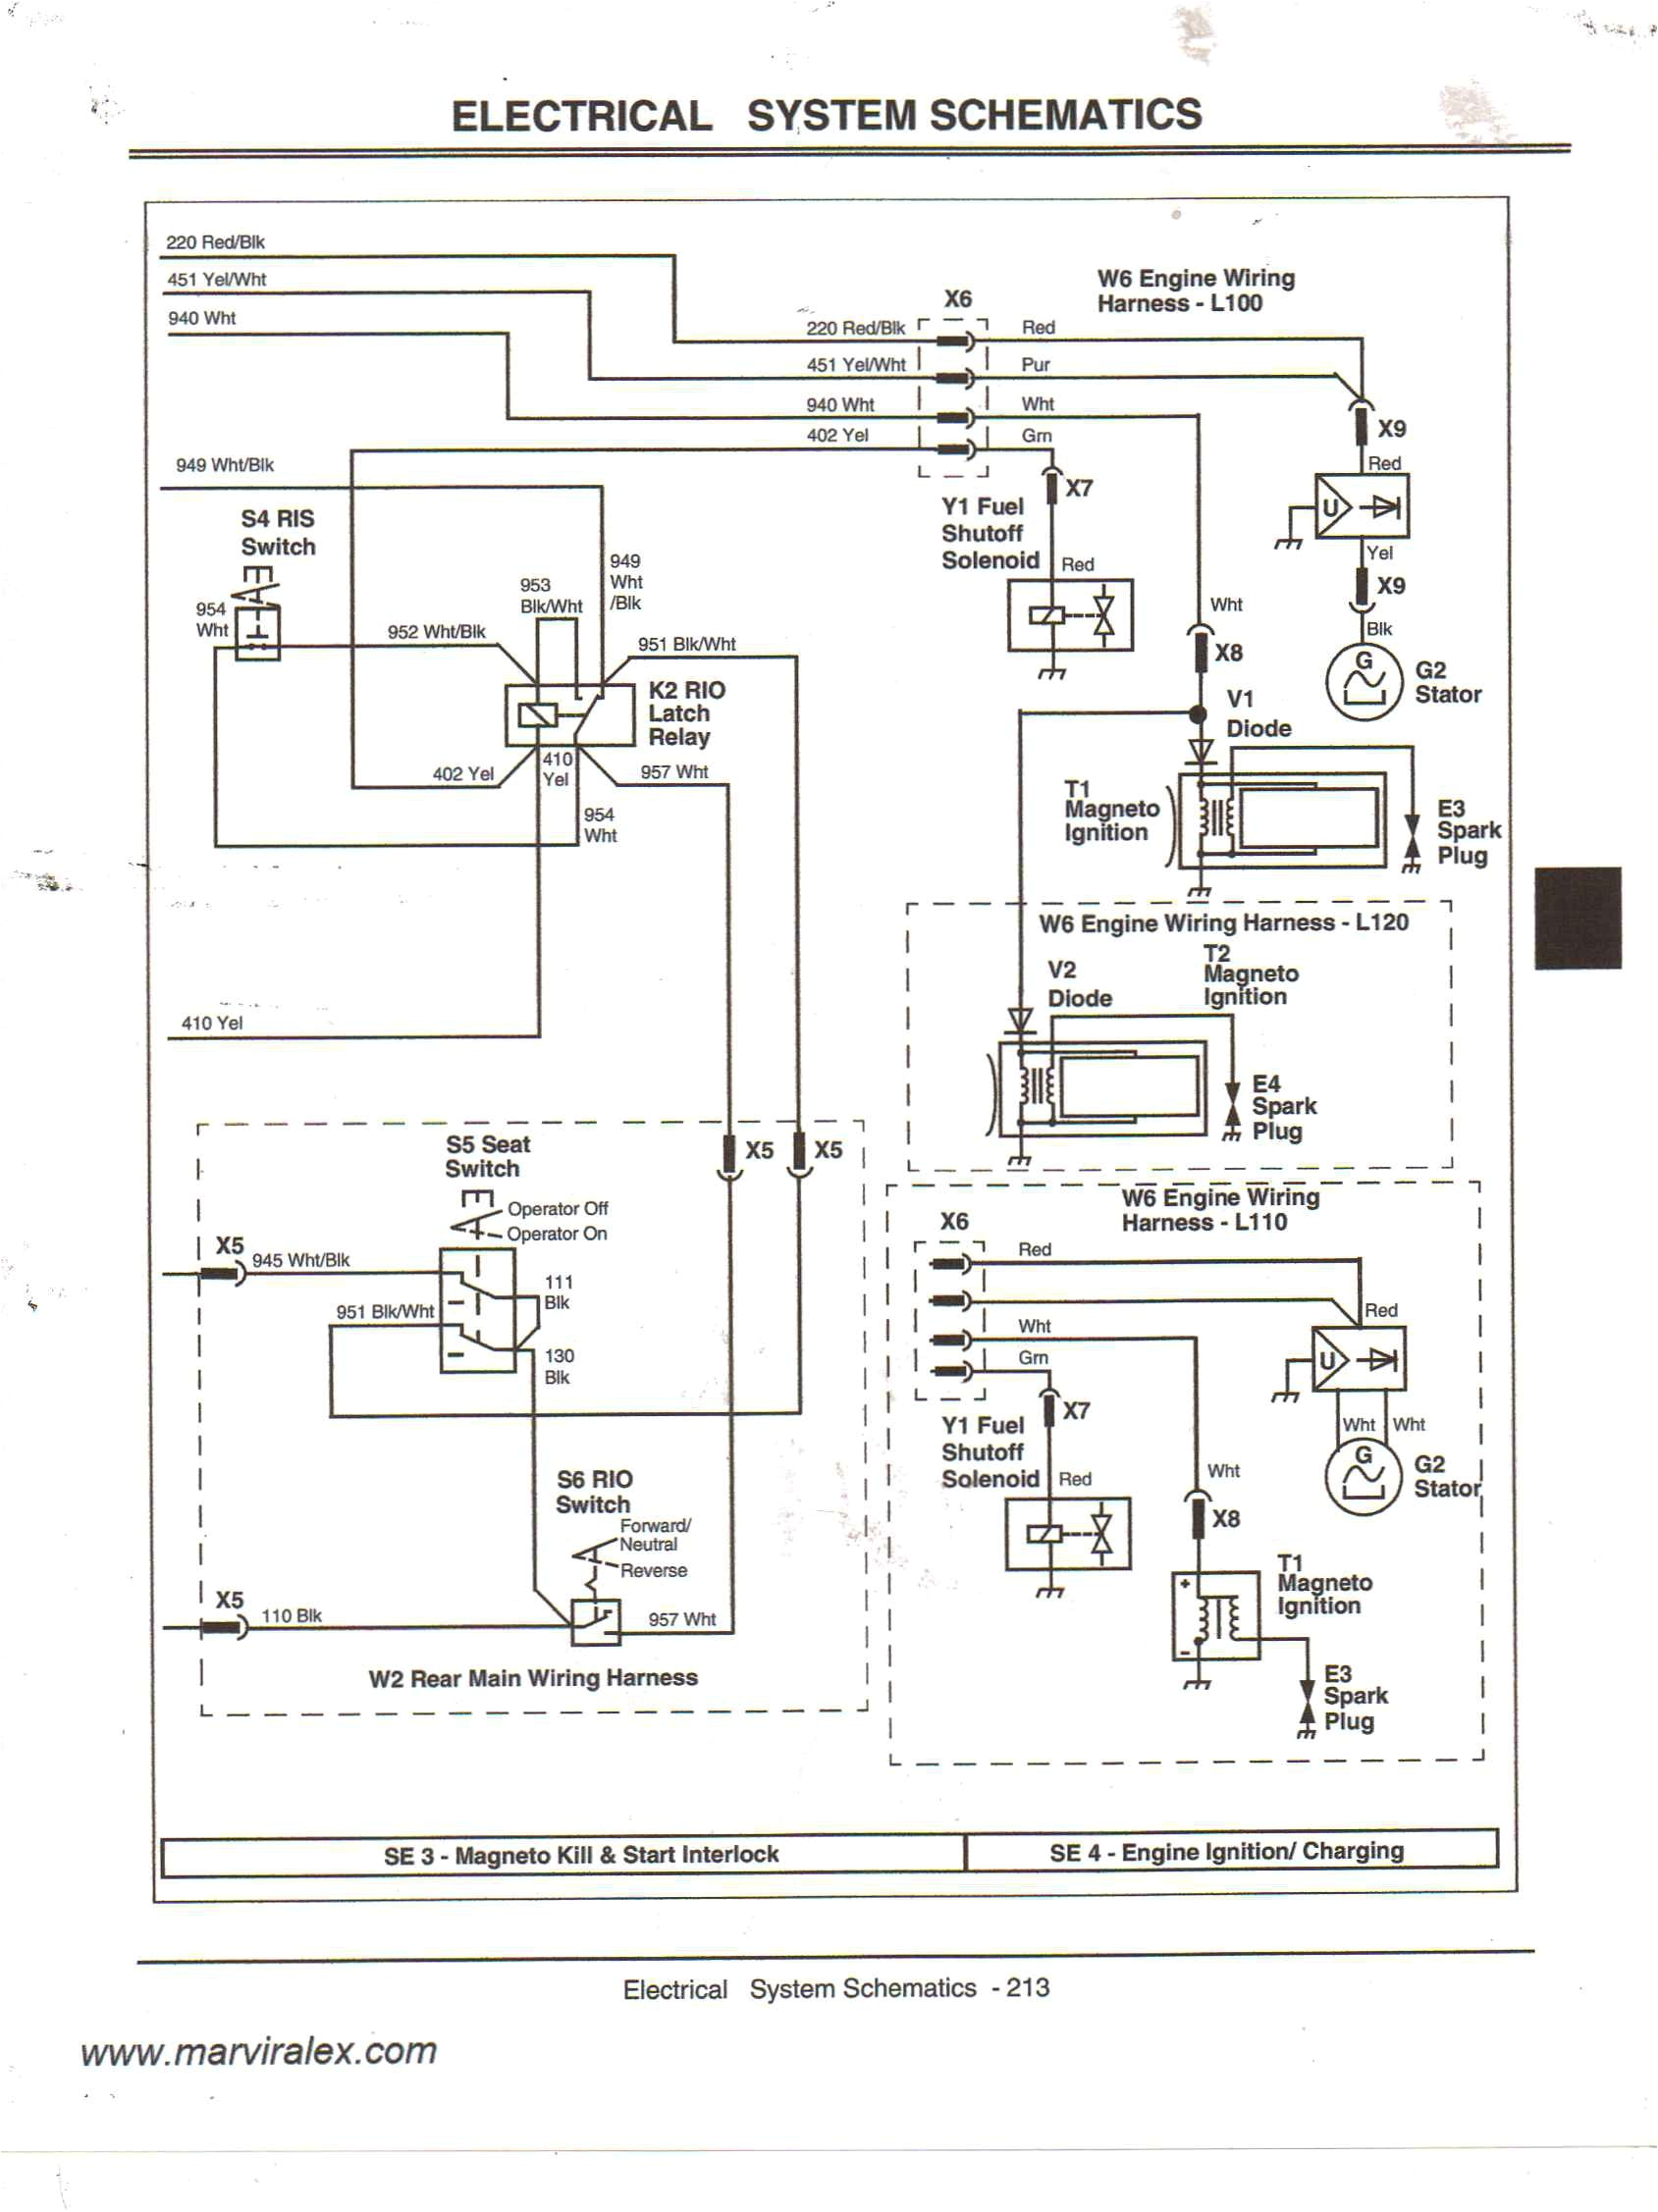 jd wiring diagram x540 sna042957 wiring diagram centrex540 john deere fuse box wiring diagram centrelx173 wiring